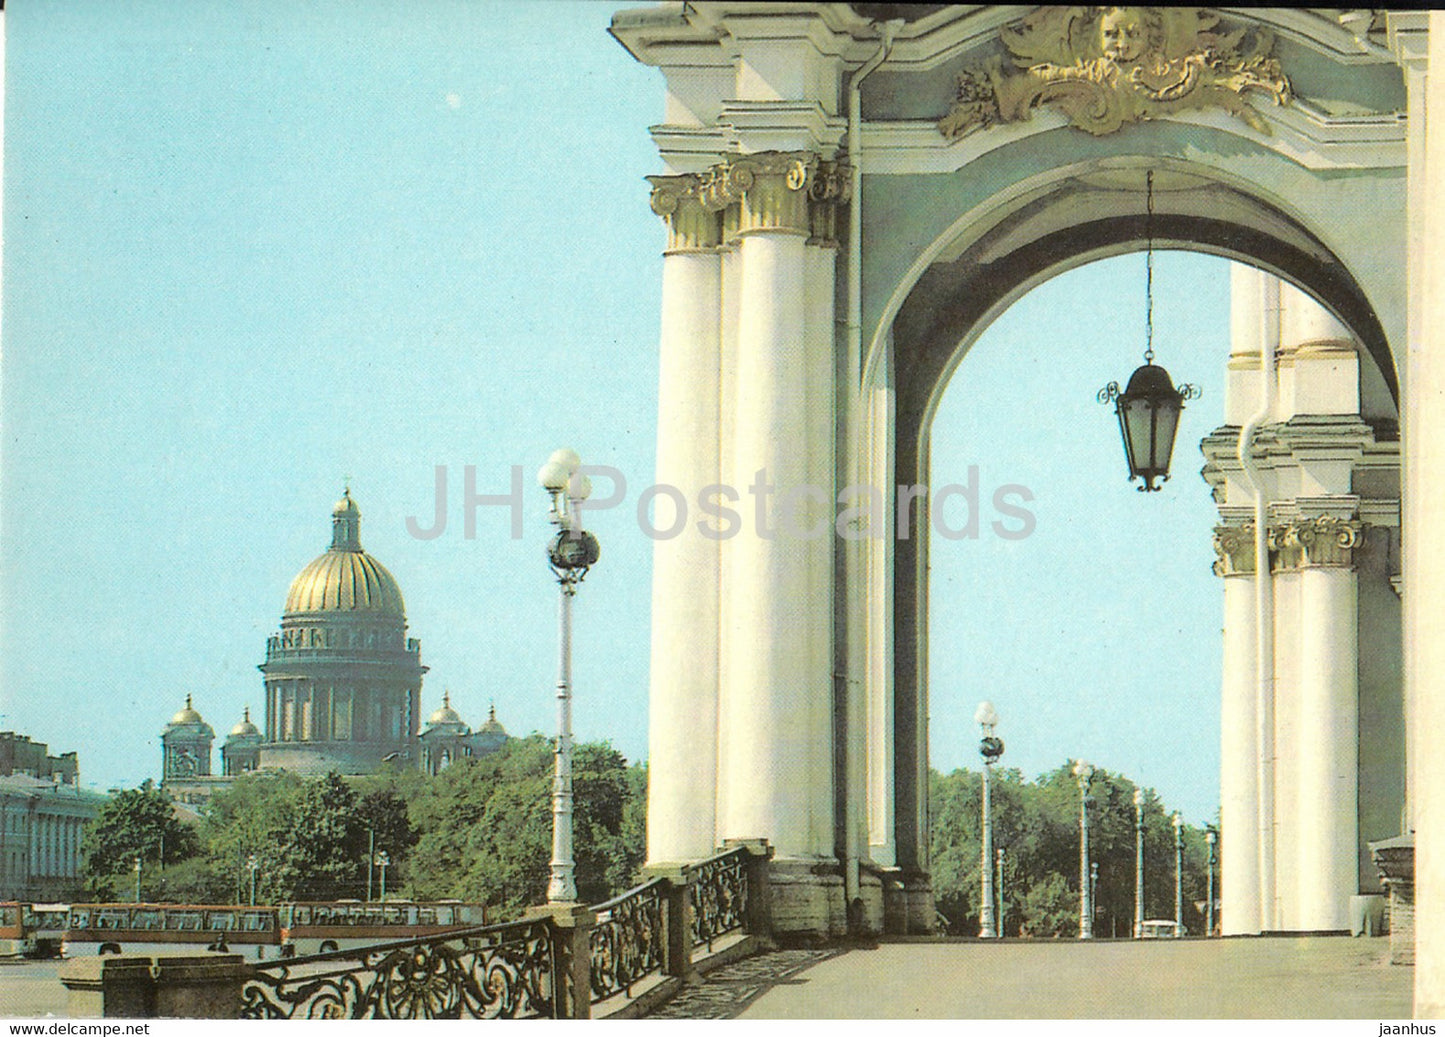 Leningrad - St Petersburg - St. Isaac's Cathedral - bus Ikarus - postal stationery - 1985 - Russia USSR - unused - JH Postcards